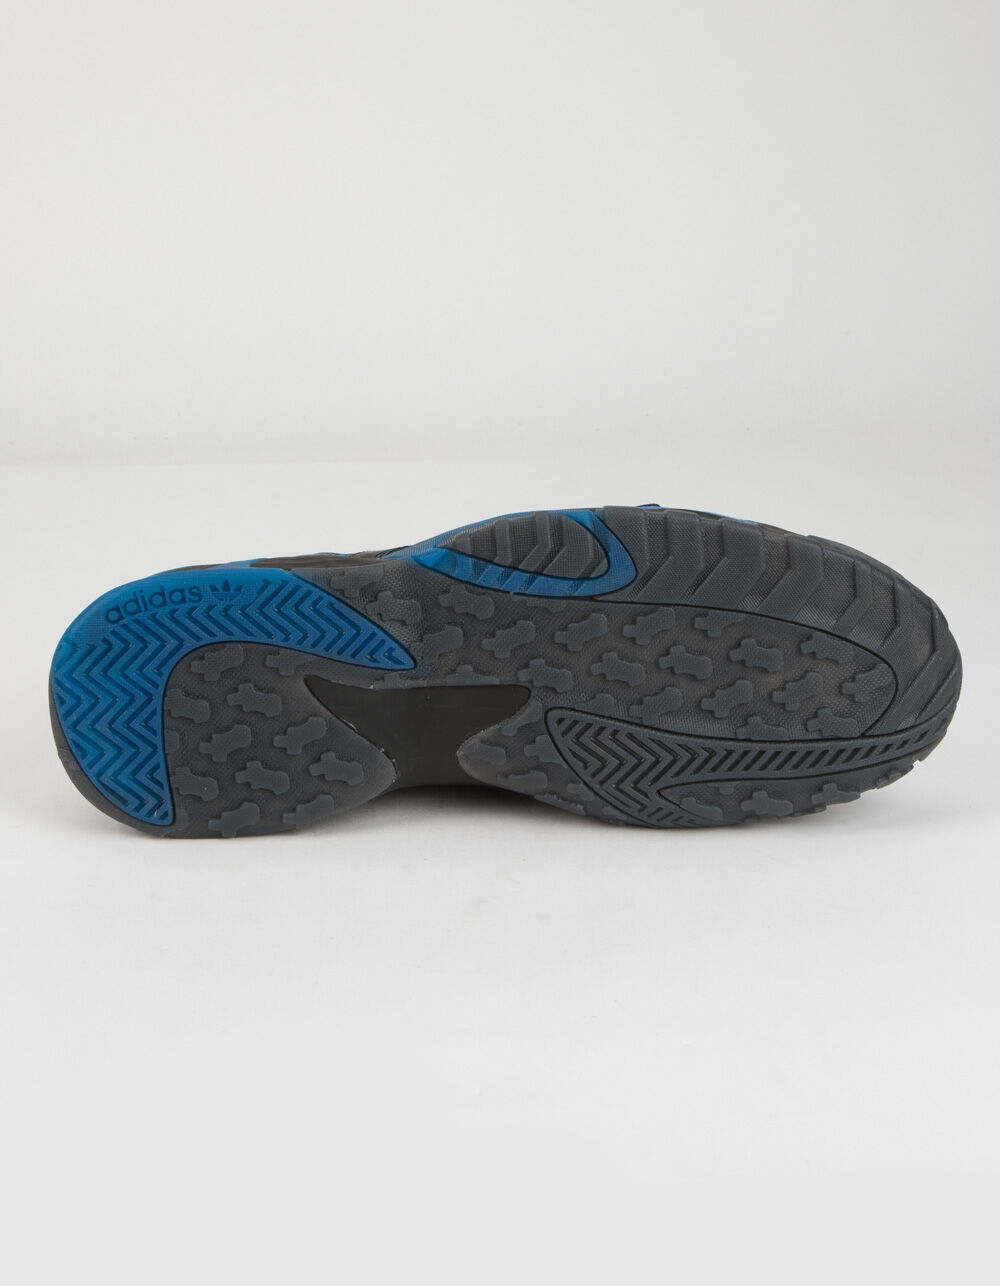 ADIDAS Streetball Mens Black Shoes - BLACK/BLUE | Tillys